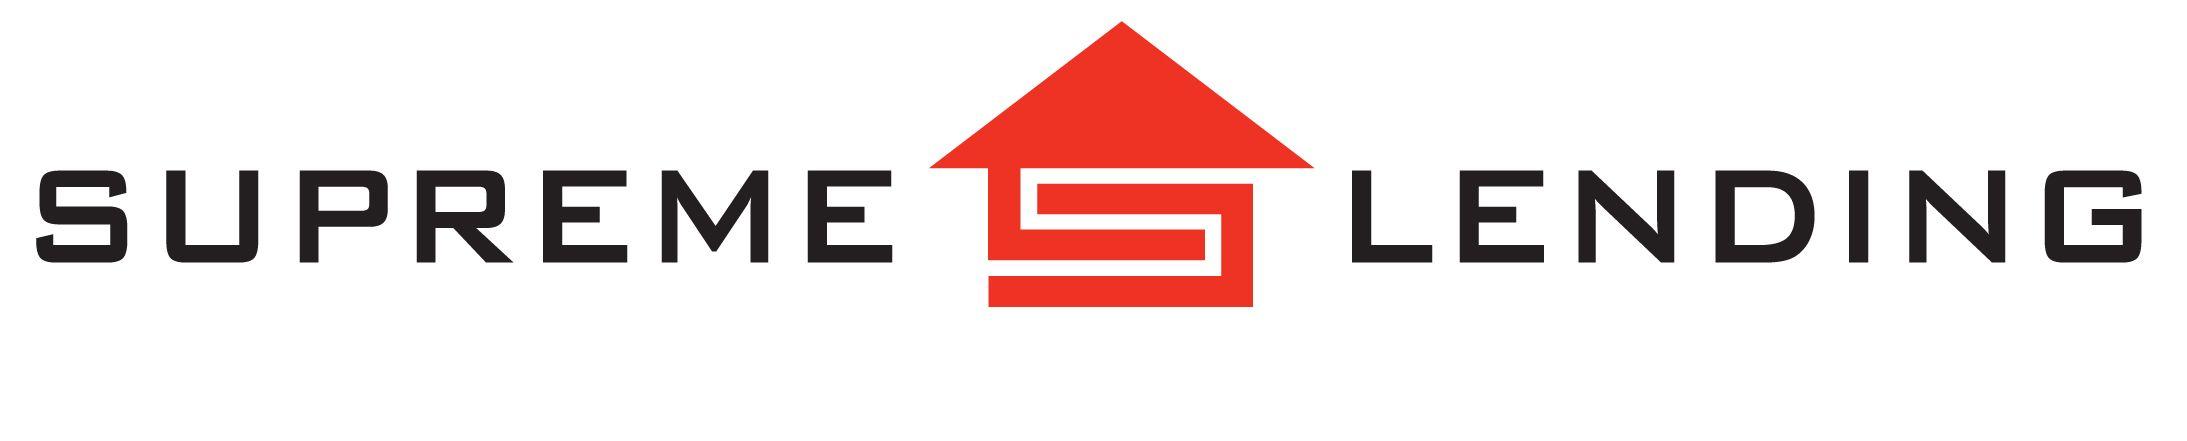 Supreme Lending House Logo - Supreme Lending – Mewael Ghebremichael | All About Vendors